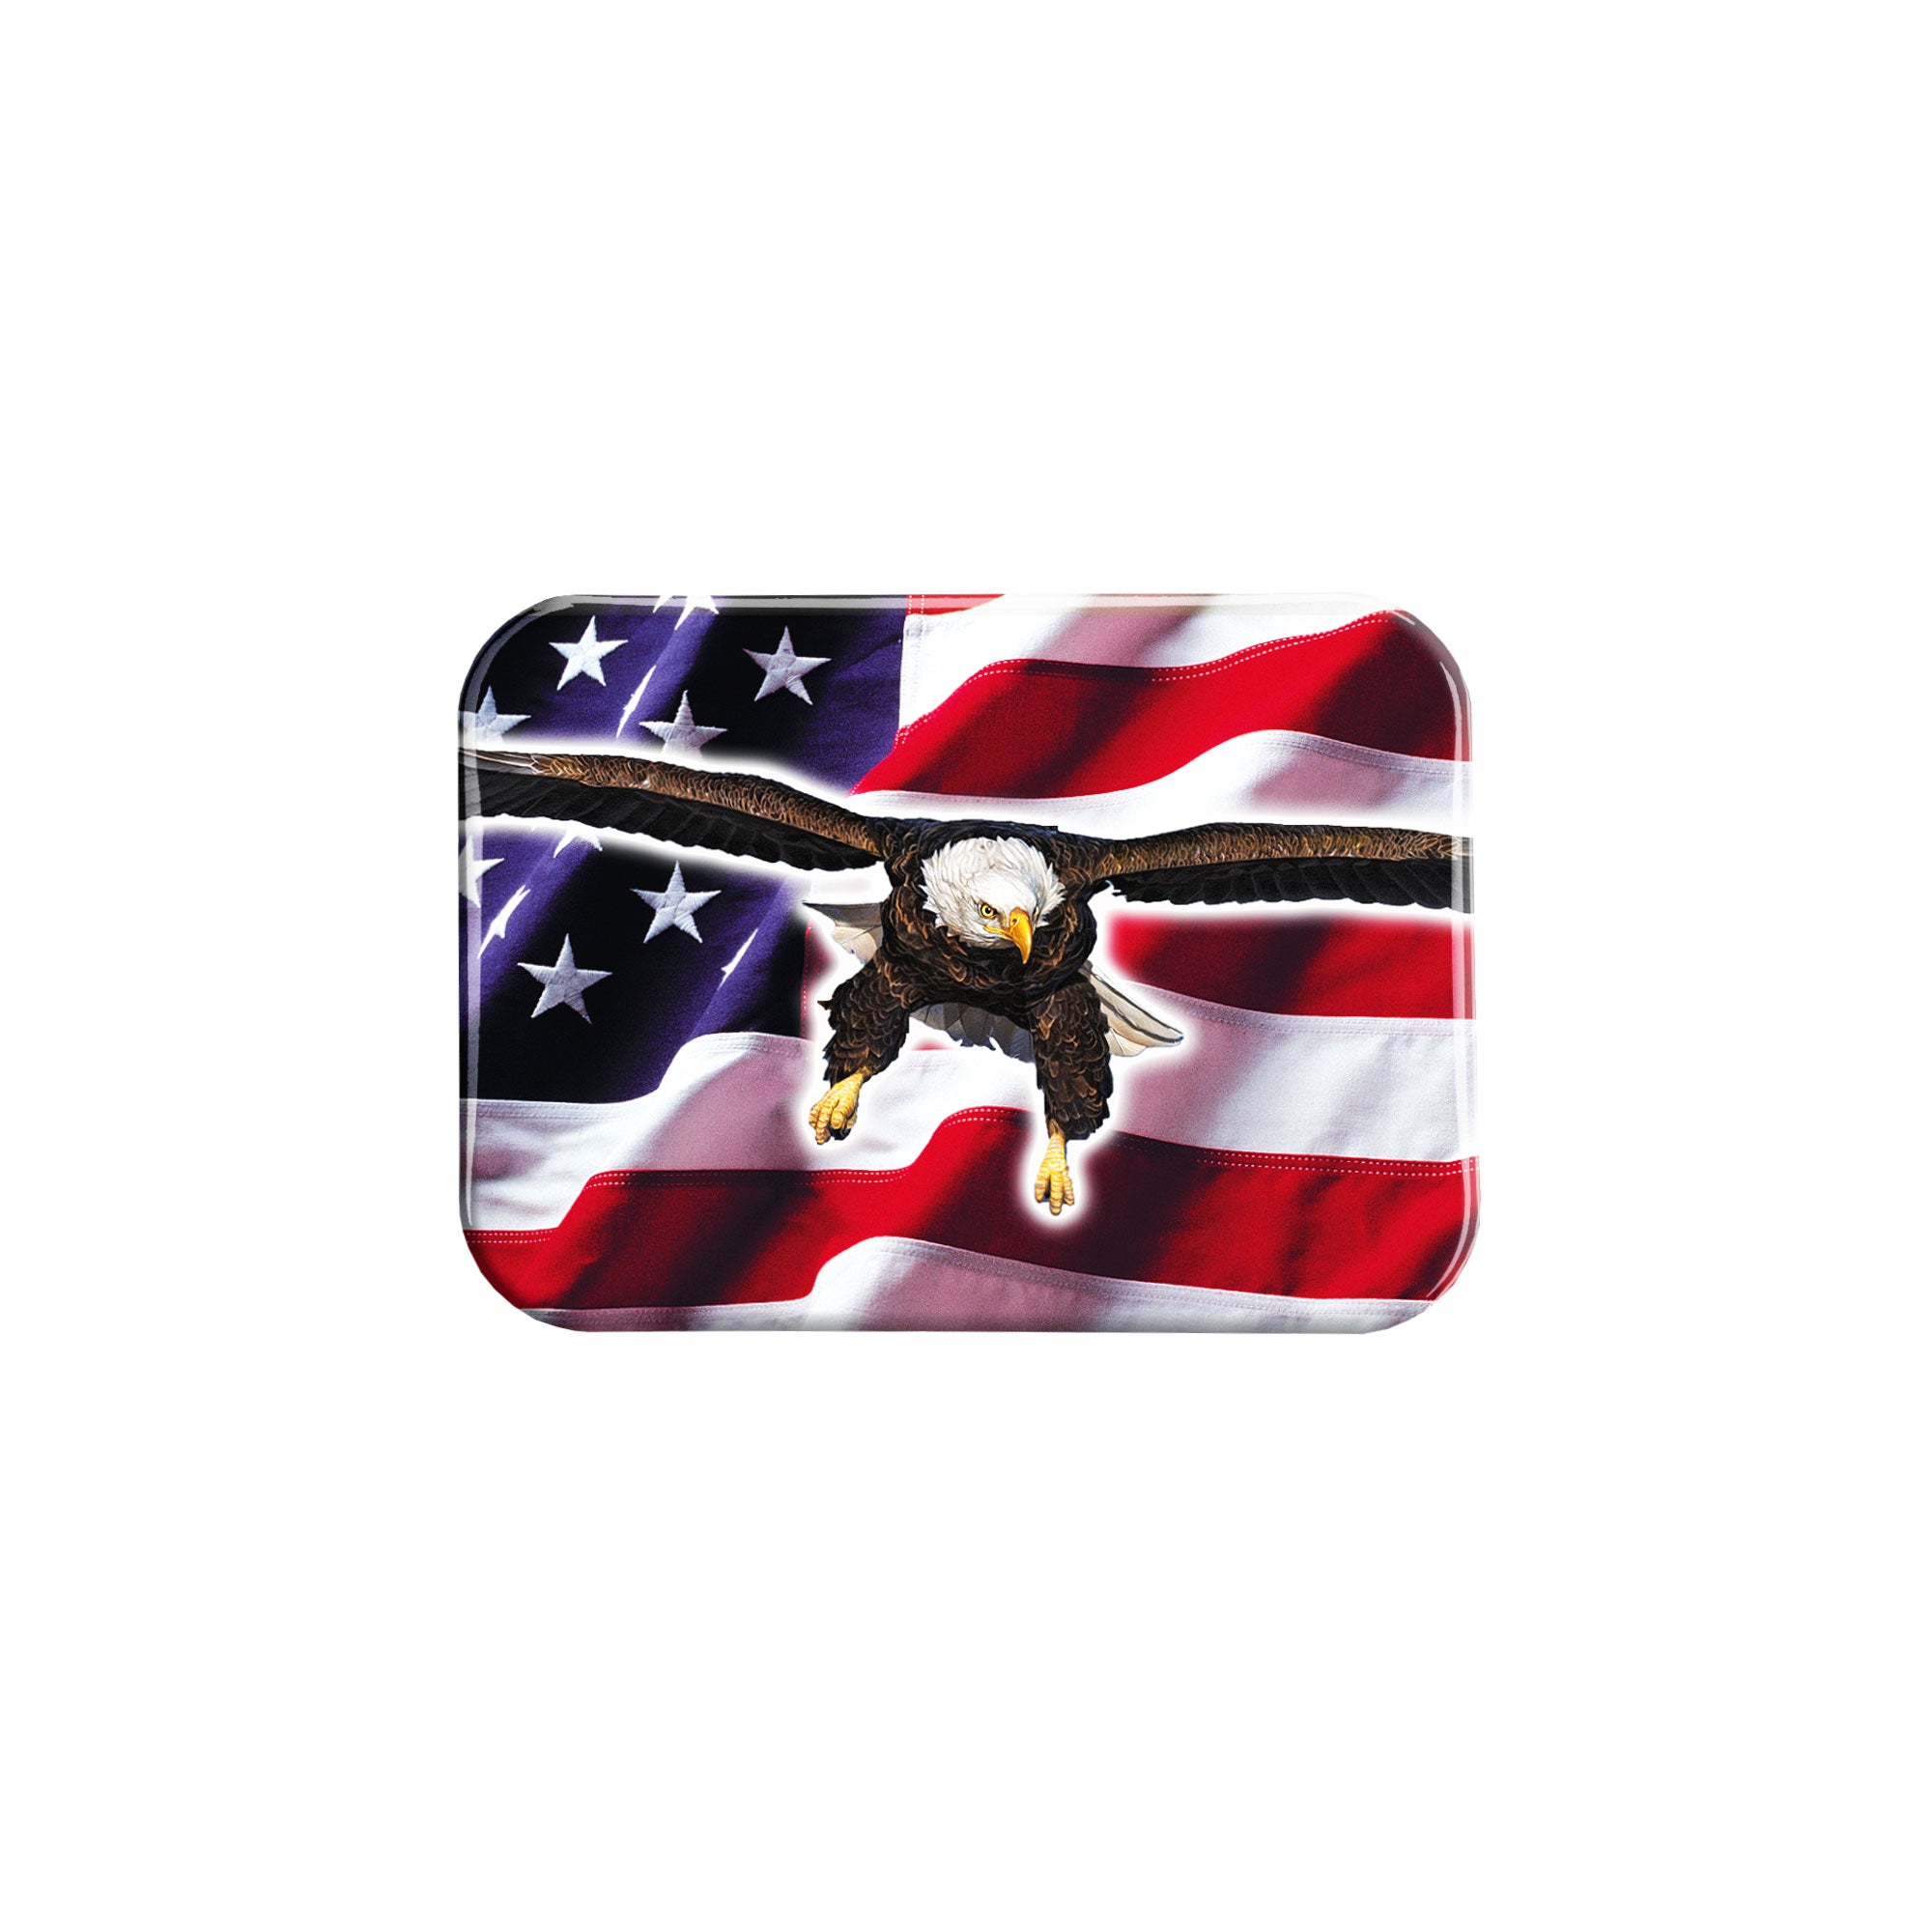 "American Icon Flag" - 2.5" X 3.5" Rectangle Fridge Magnets